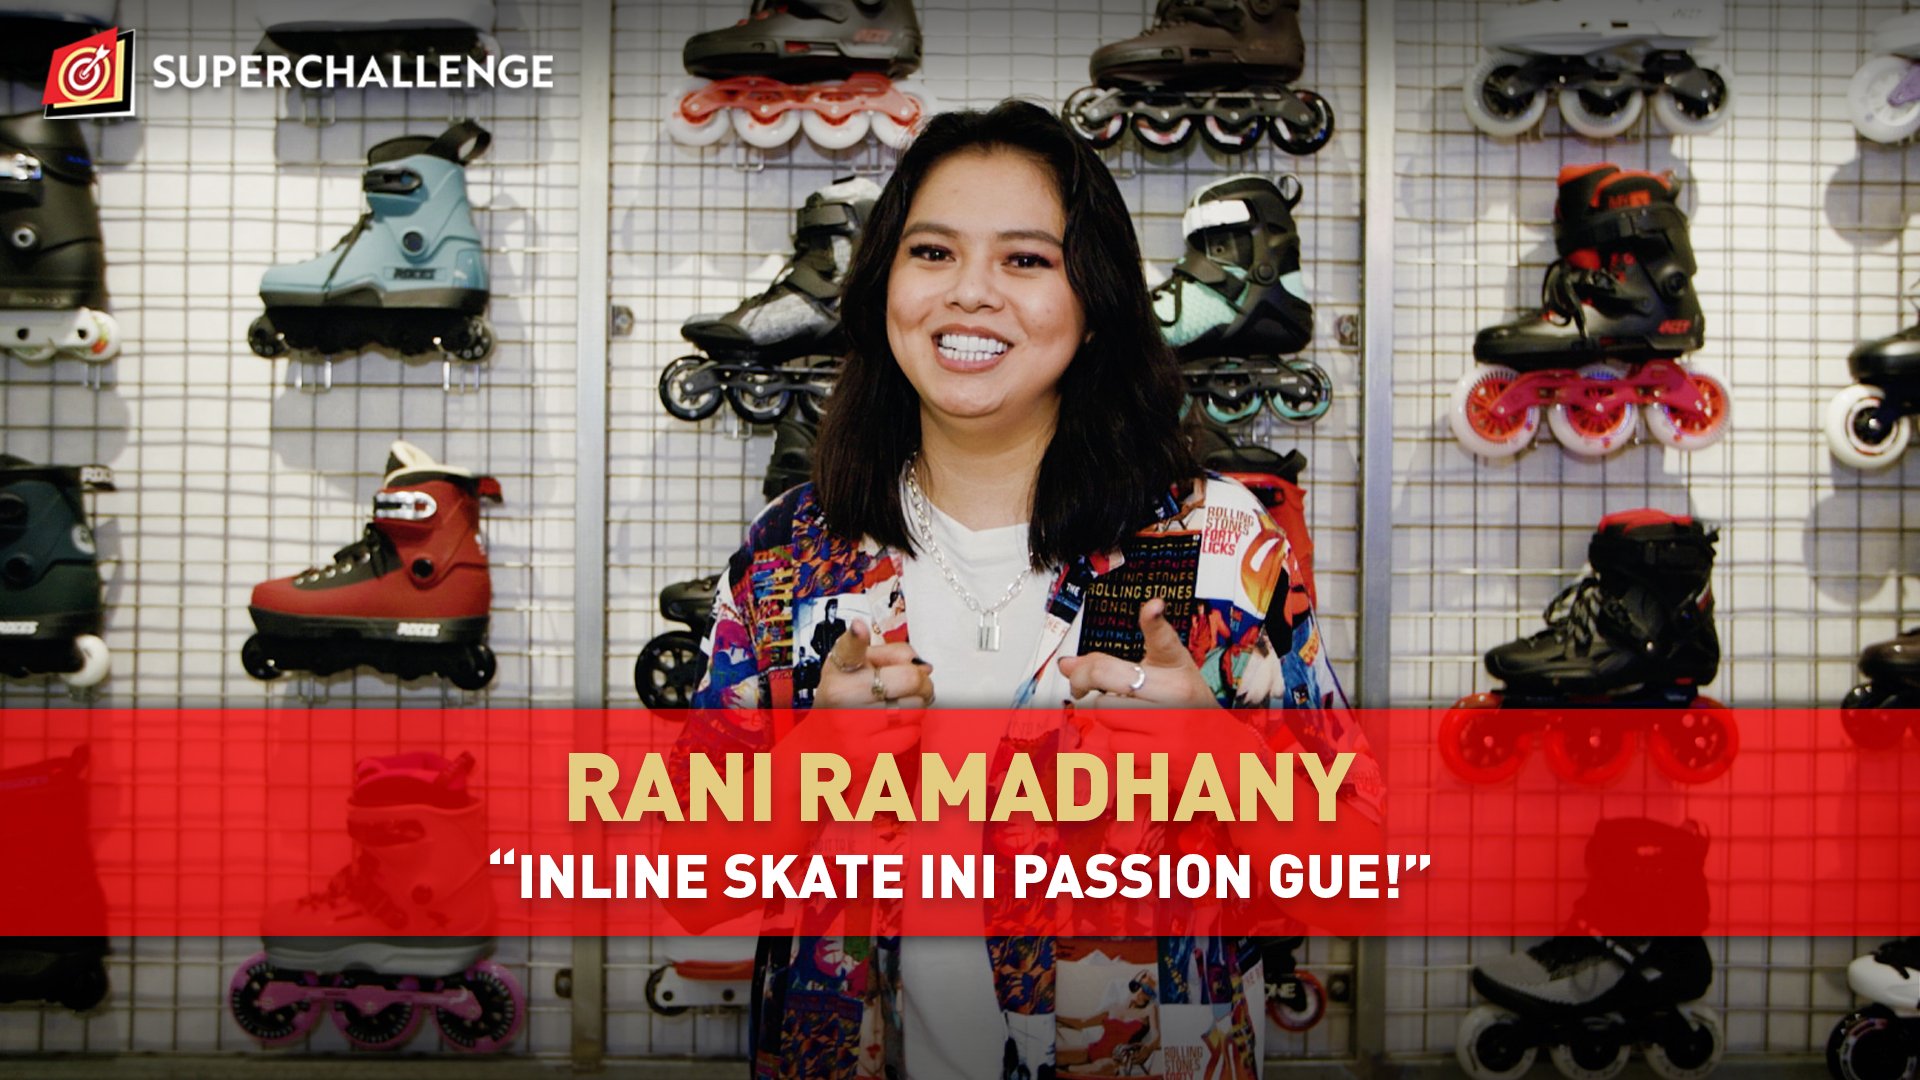 SUPERCHALLENGE – Rani Ramadhany "Inline Skate Ini Passion Gue!"